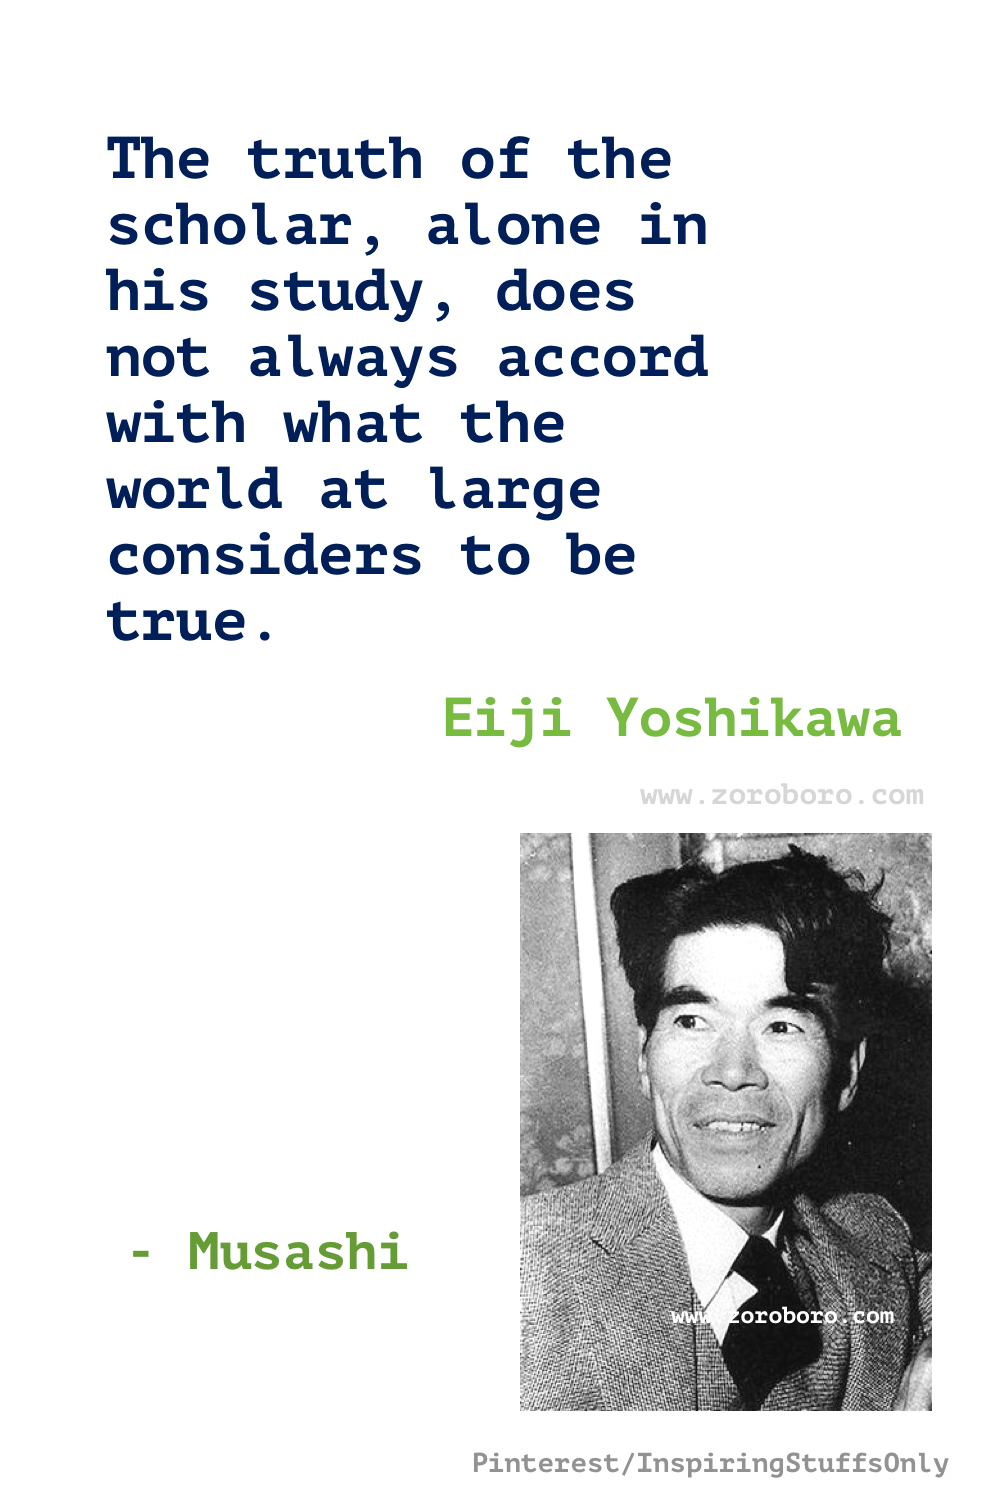 Eiji Yoshikawa Quotes. Eiji Yoshikawa Books Quotes, Musashi Quotes, Taiko: An Epic Novel of War and Glory in Feudal Japan Quotes. Eiji Yoshikawa Novel Quotes, Eiji Yoshikawa Novel Quotes, Eiji Yoshikawa - Musashi: An Epic Novel of the Samurai Era Quotes.